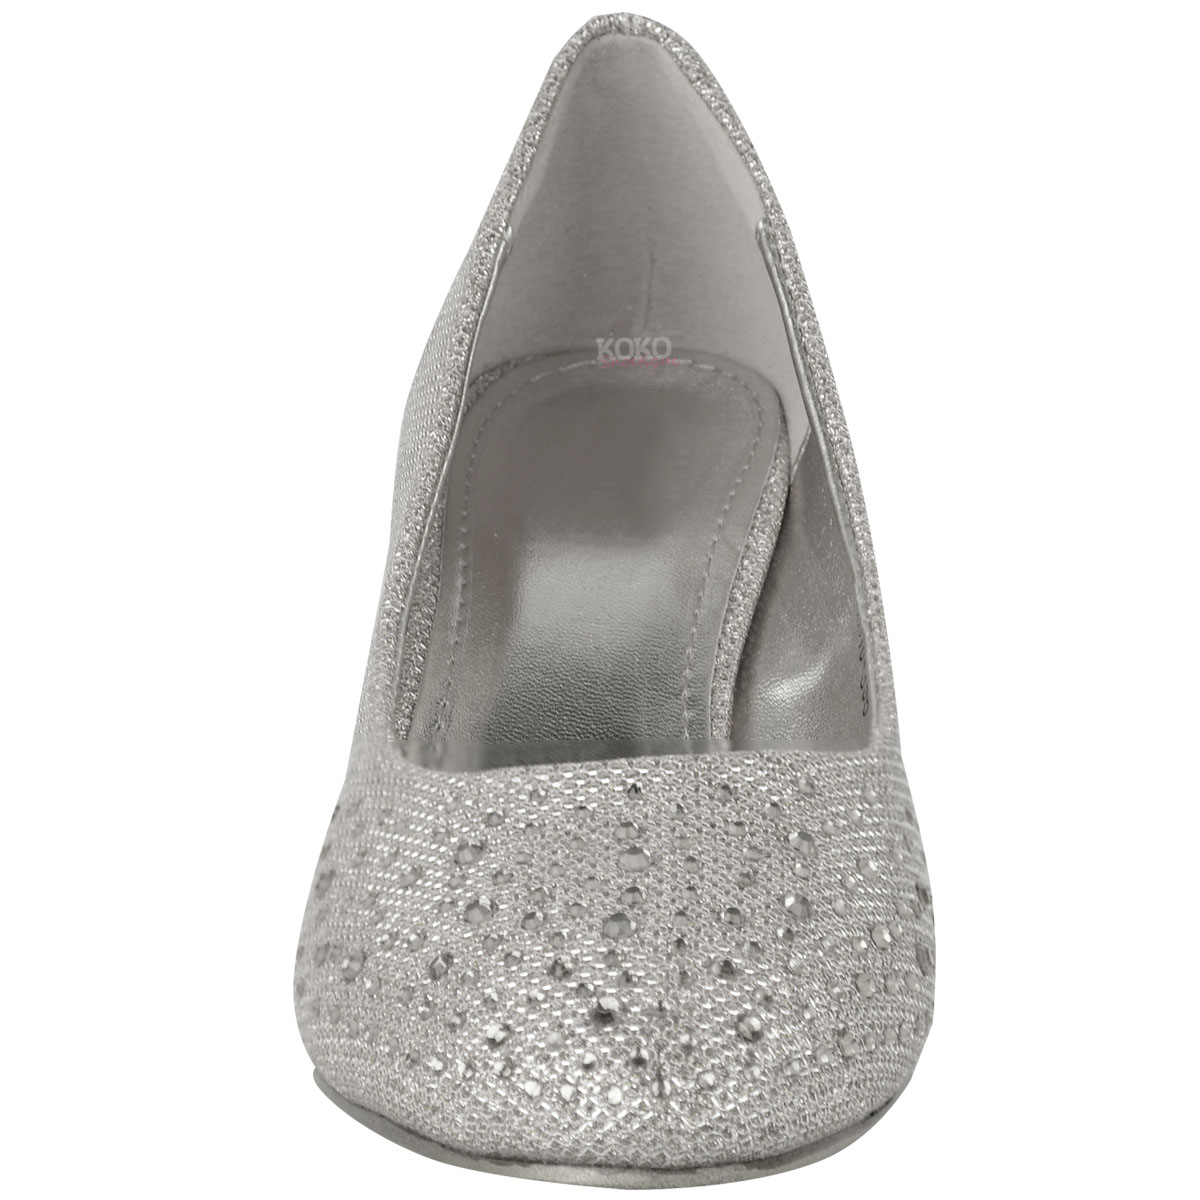 silver kitten heel court shoes